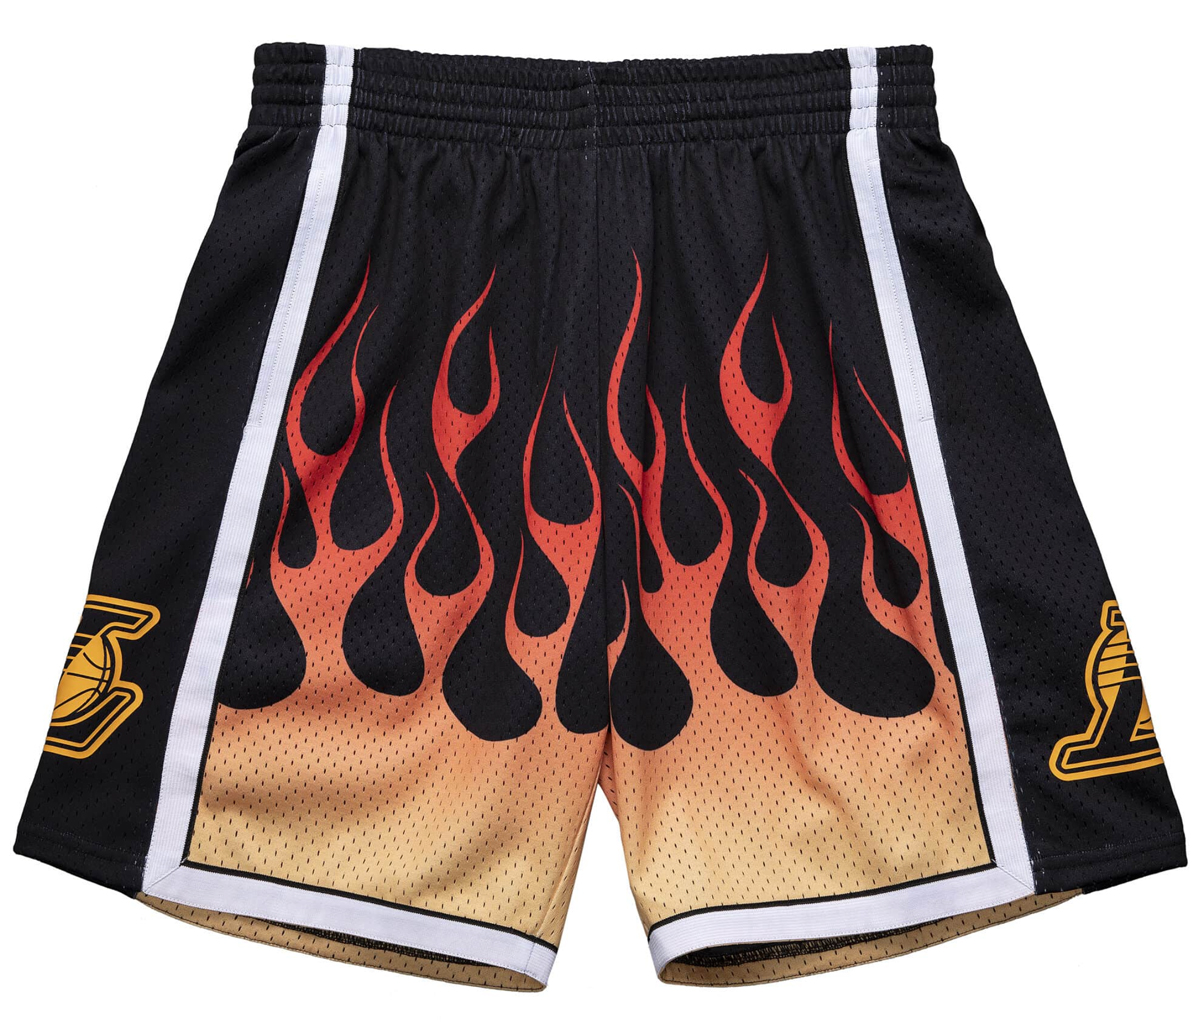 la-lakers-flames-shorts-mitchell-ness